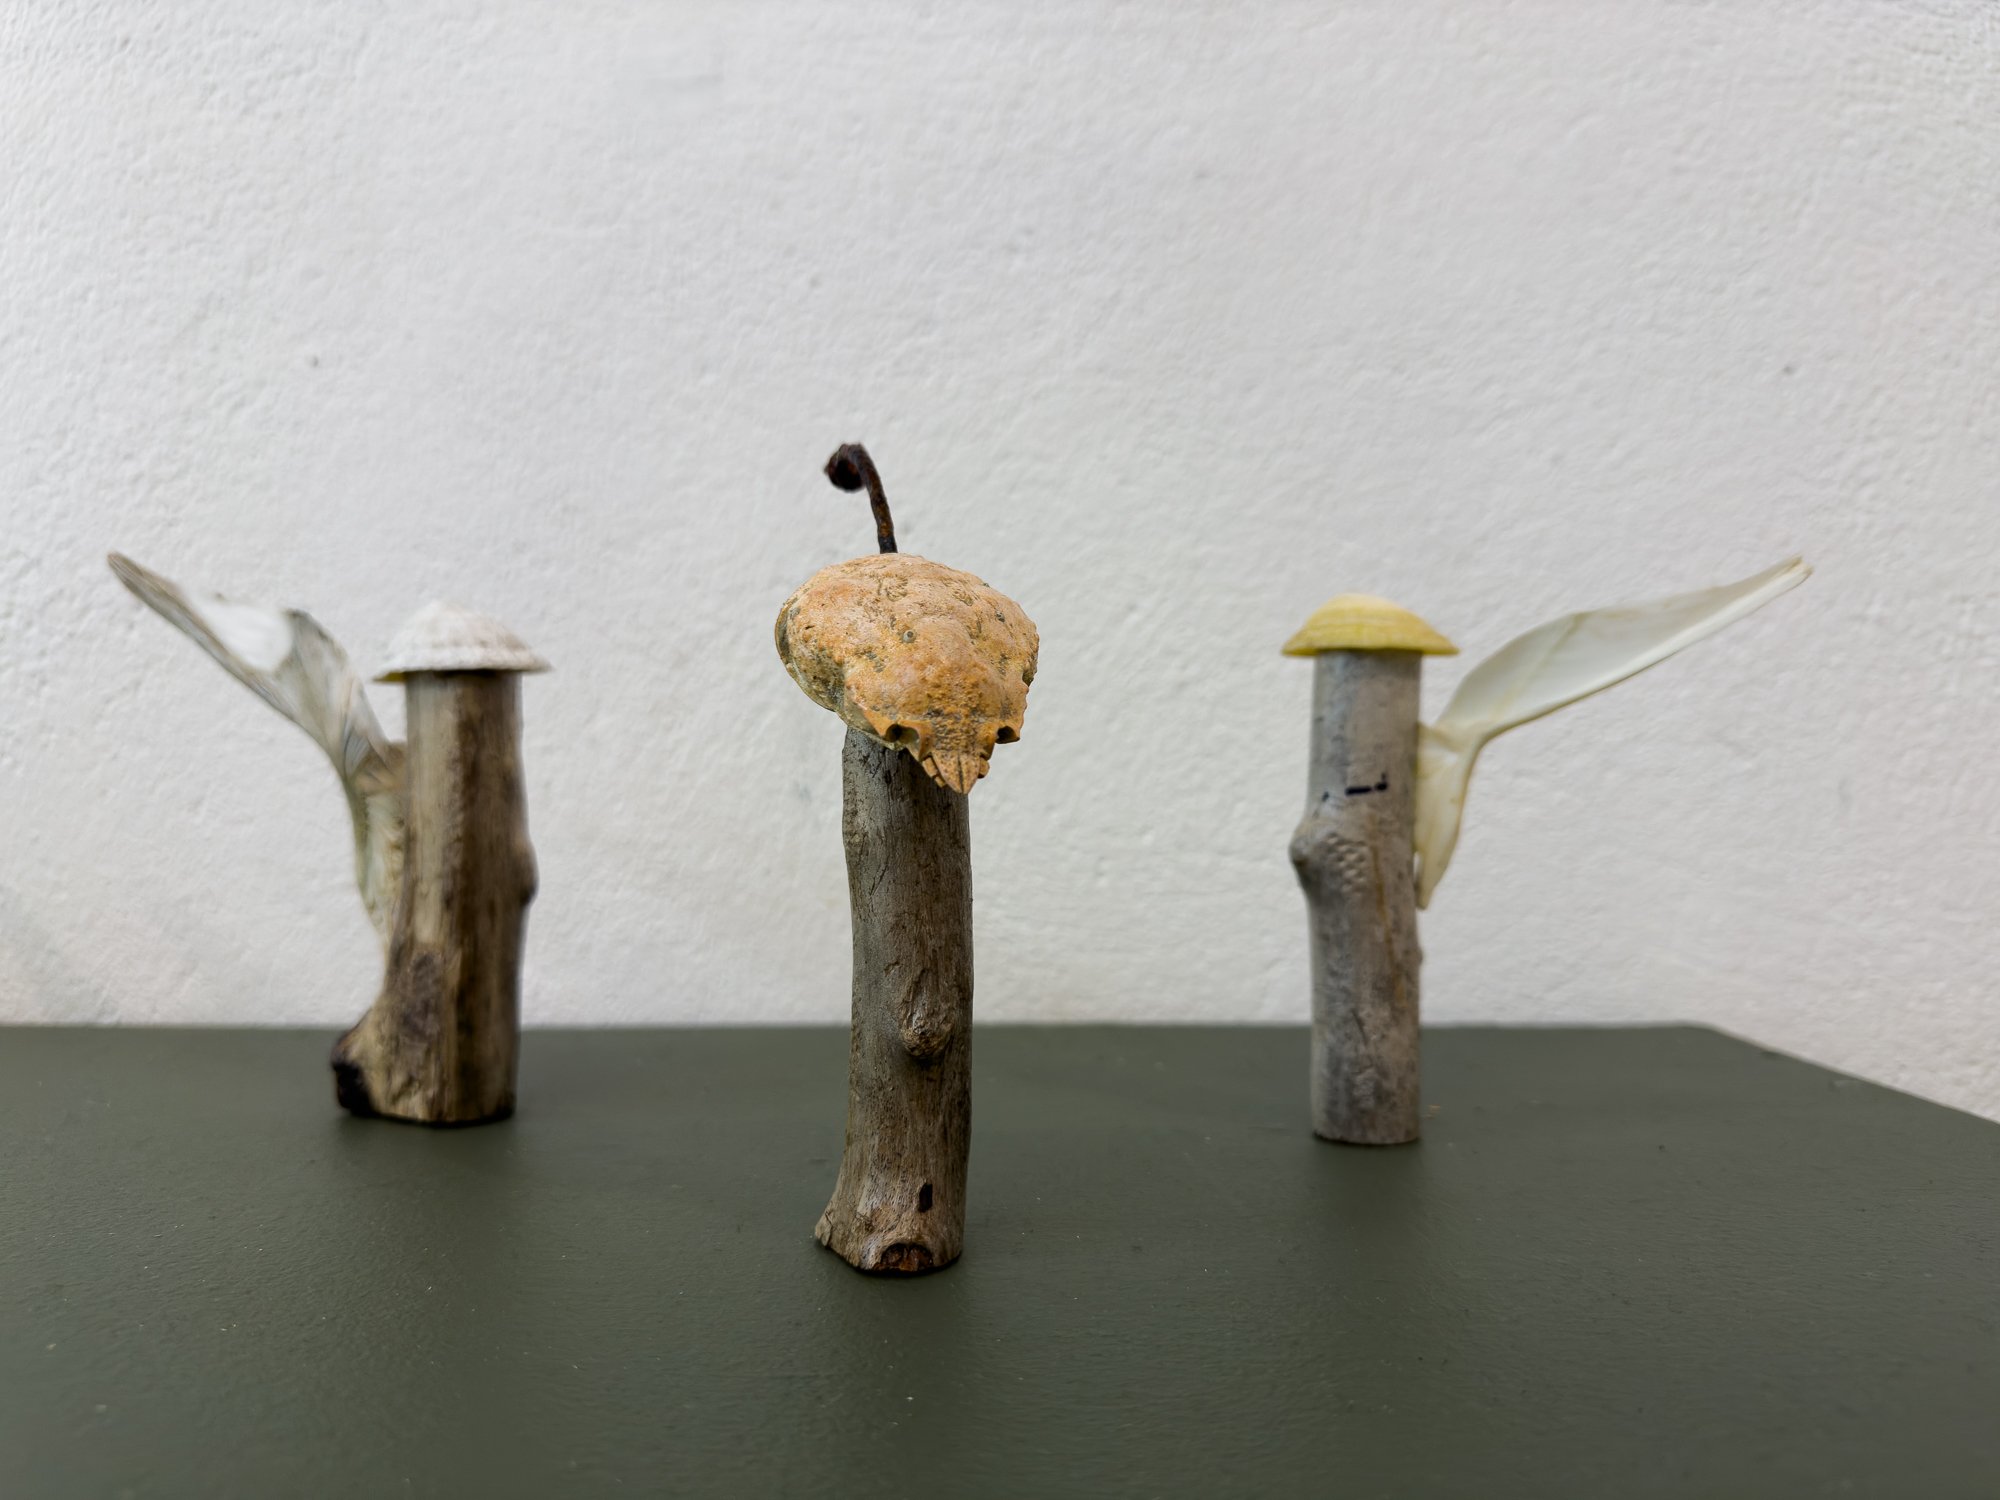   Small Sculptures  av Rudi Caeyers. Foto: Hilde Sørstrøm. 